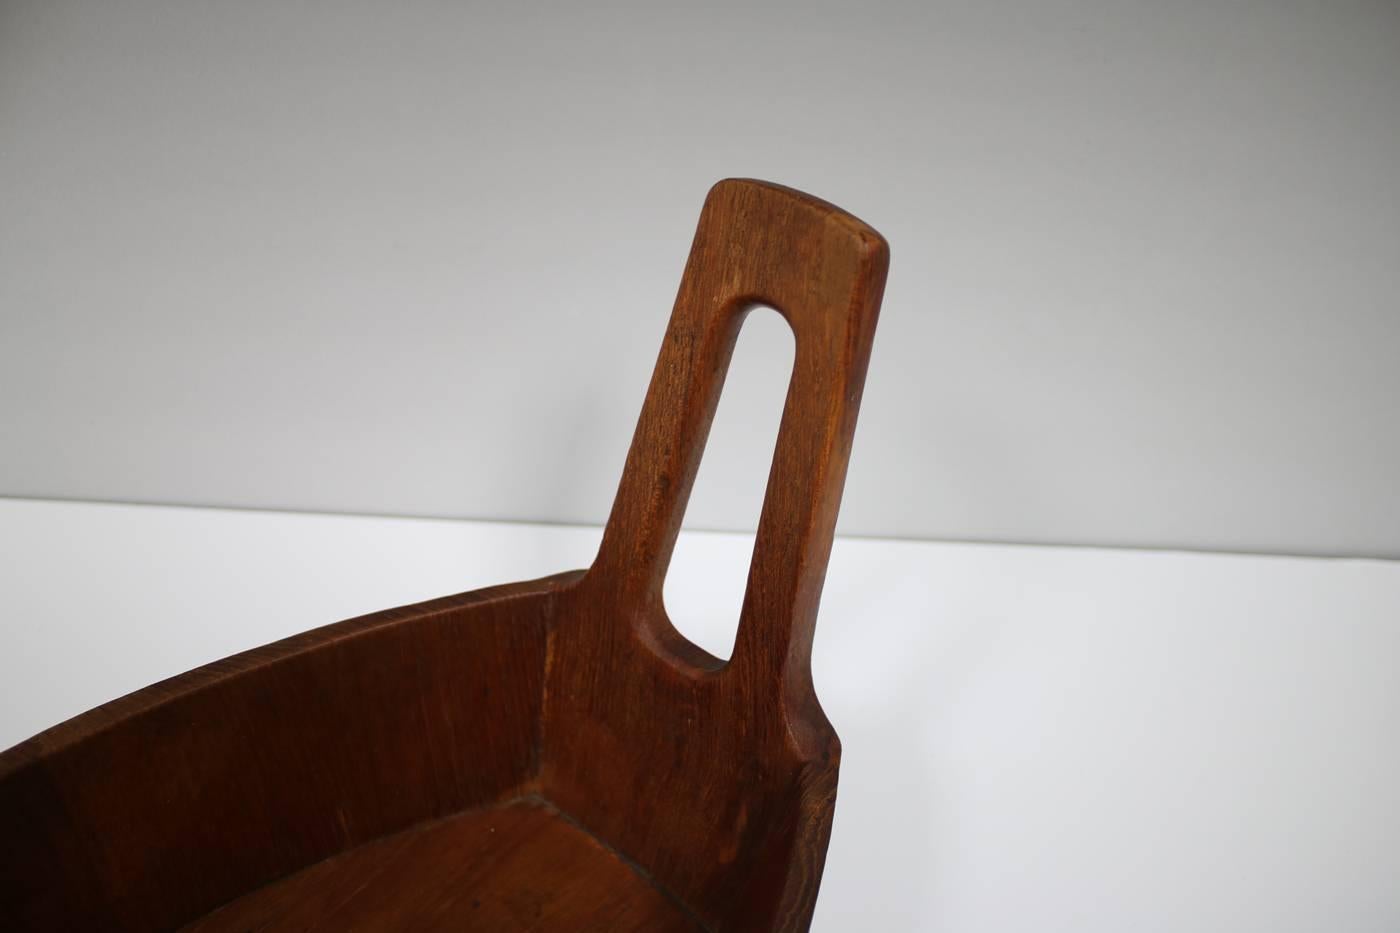 Mid-Century Modern 1950s Sculptural Teak Bowl by Anri Form, Italy, Midcentury Italian Modern Design For Sale